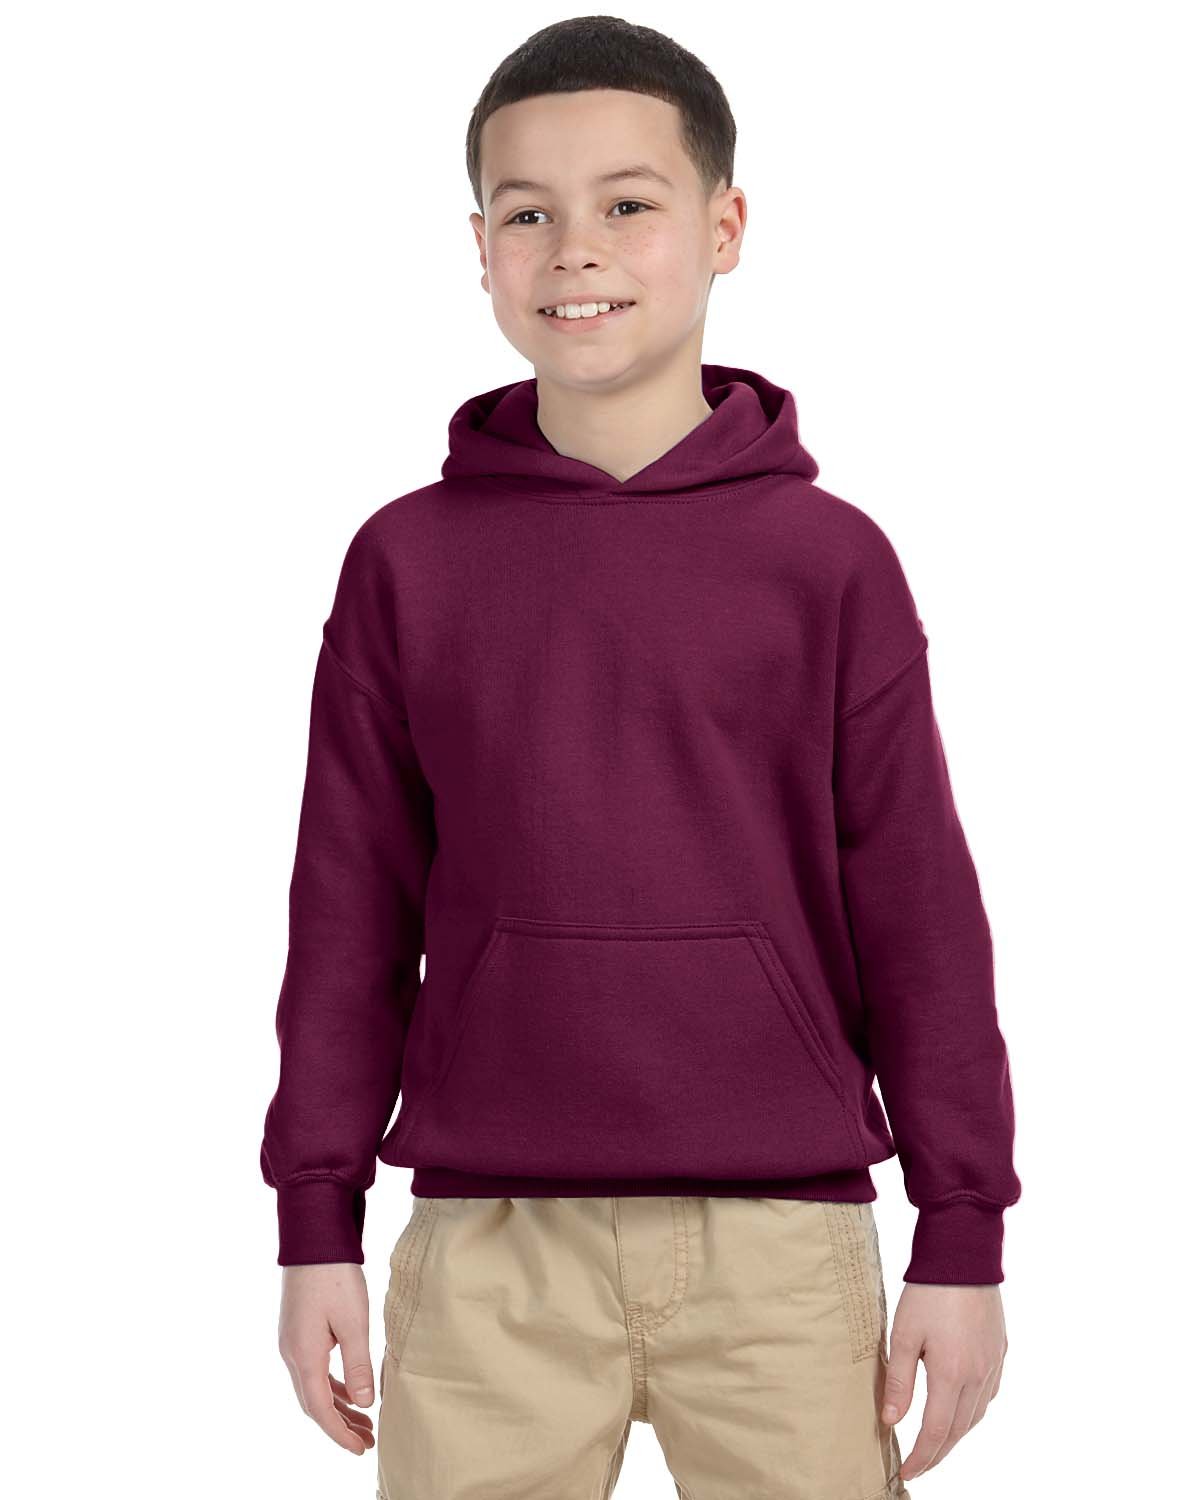 A008 18500B Youth Hooded Sweatshirt